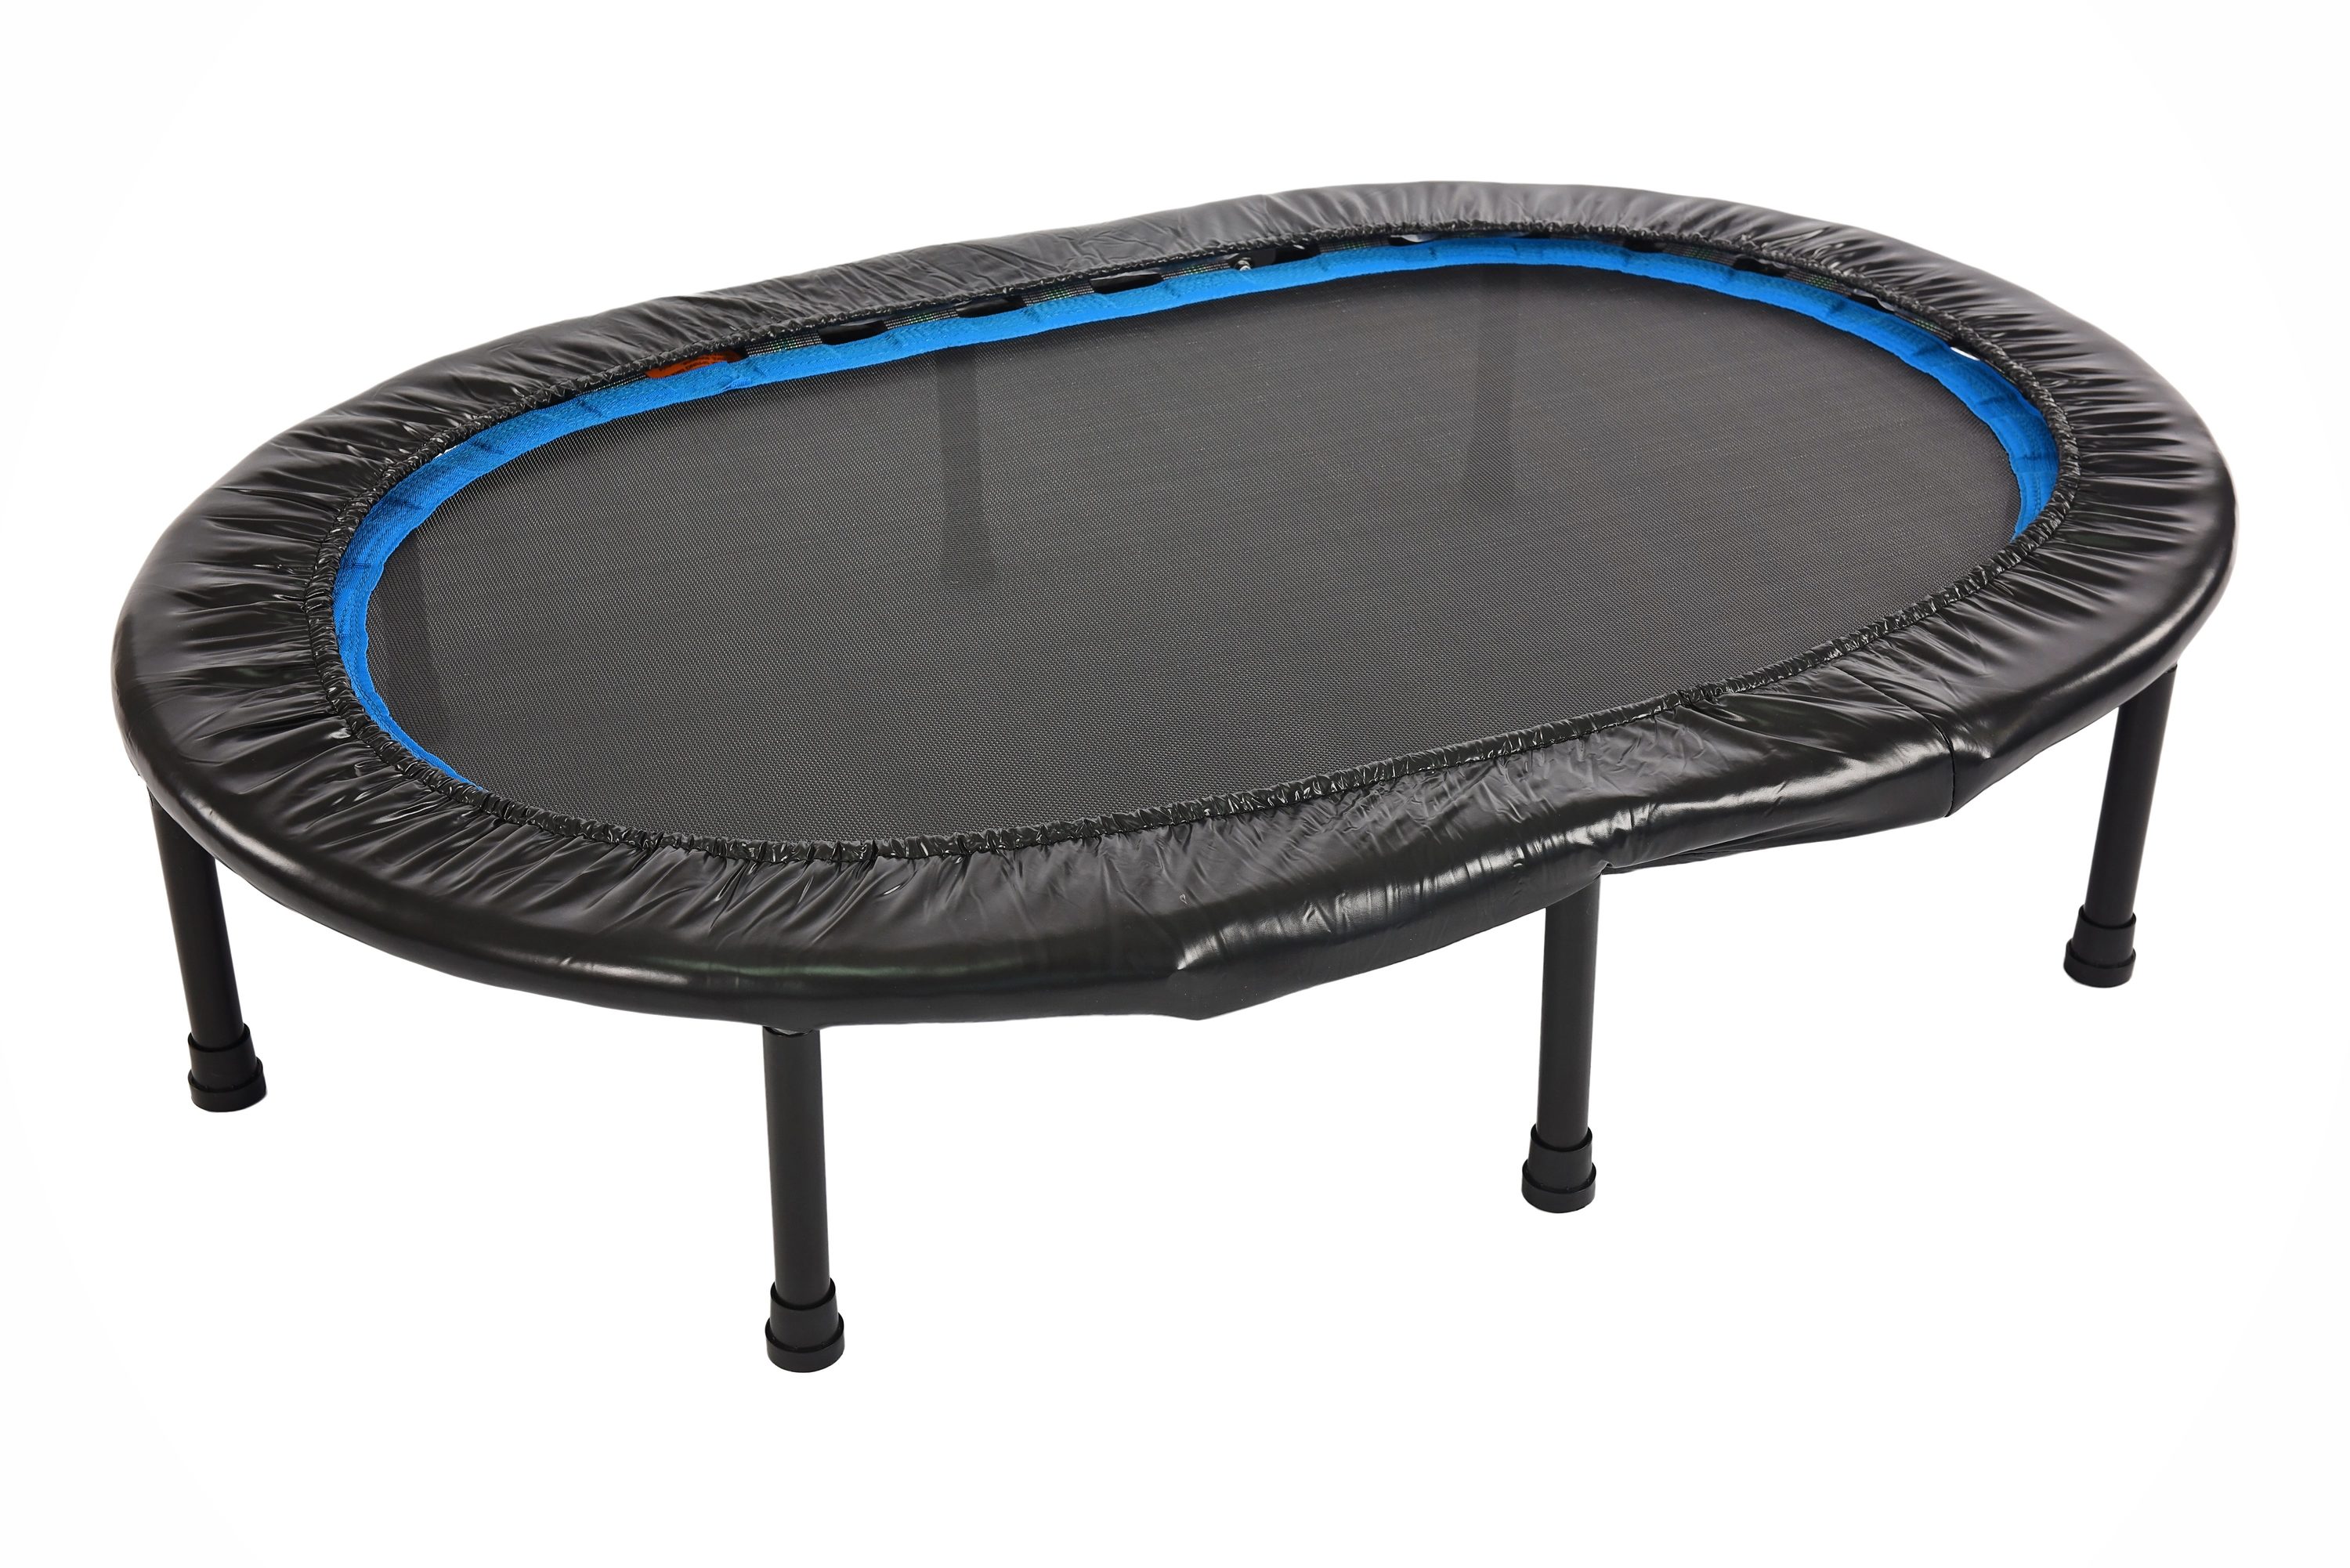 Black/Blue for sale online Stamina 35-1704 Intone Oval Fitness Trampoline 